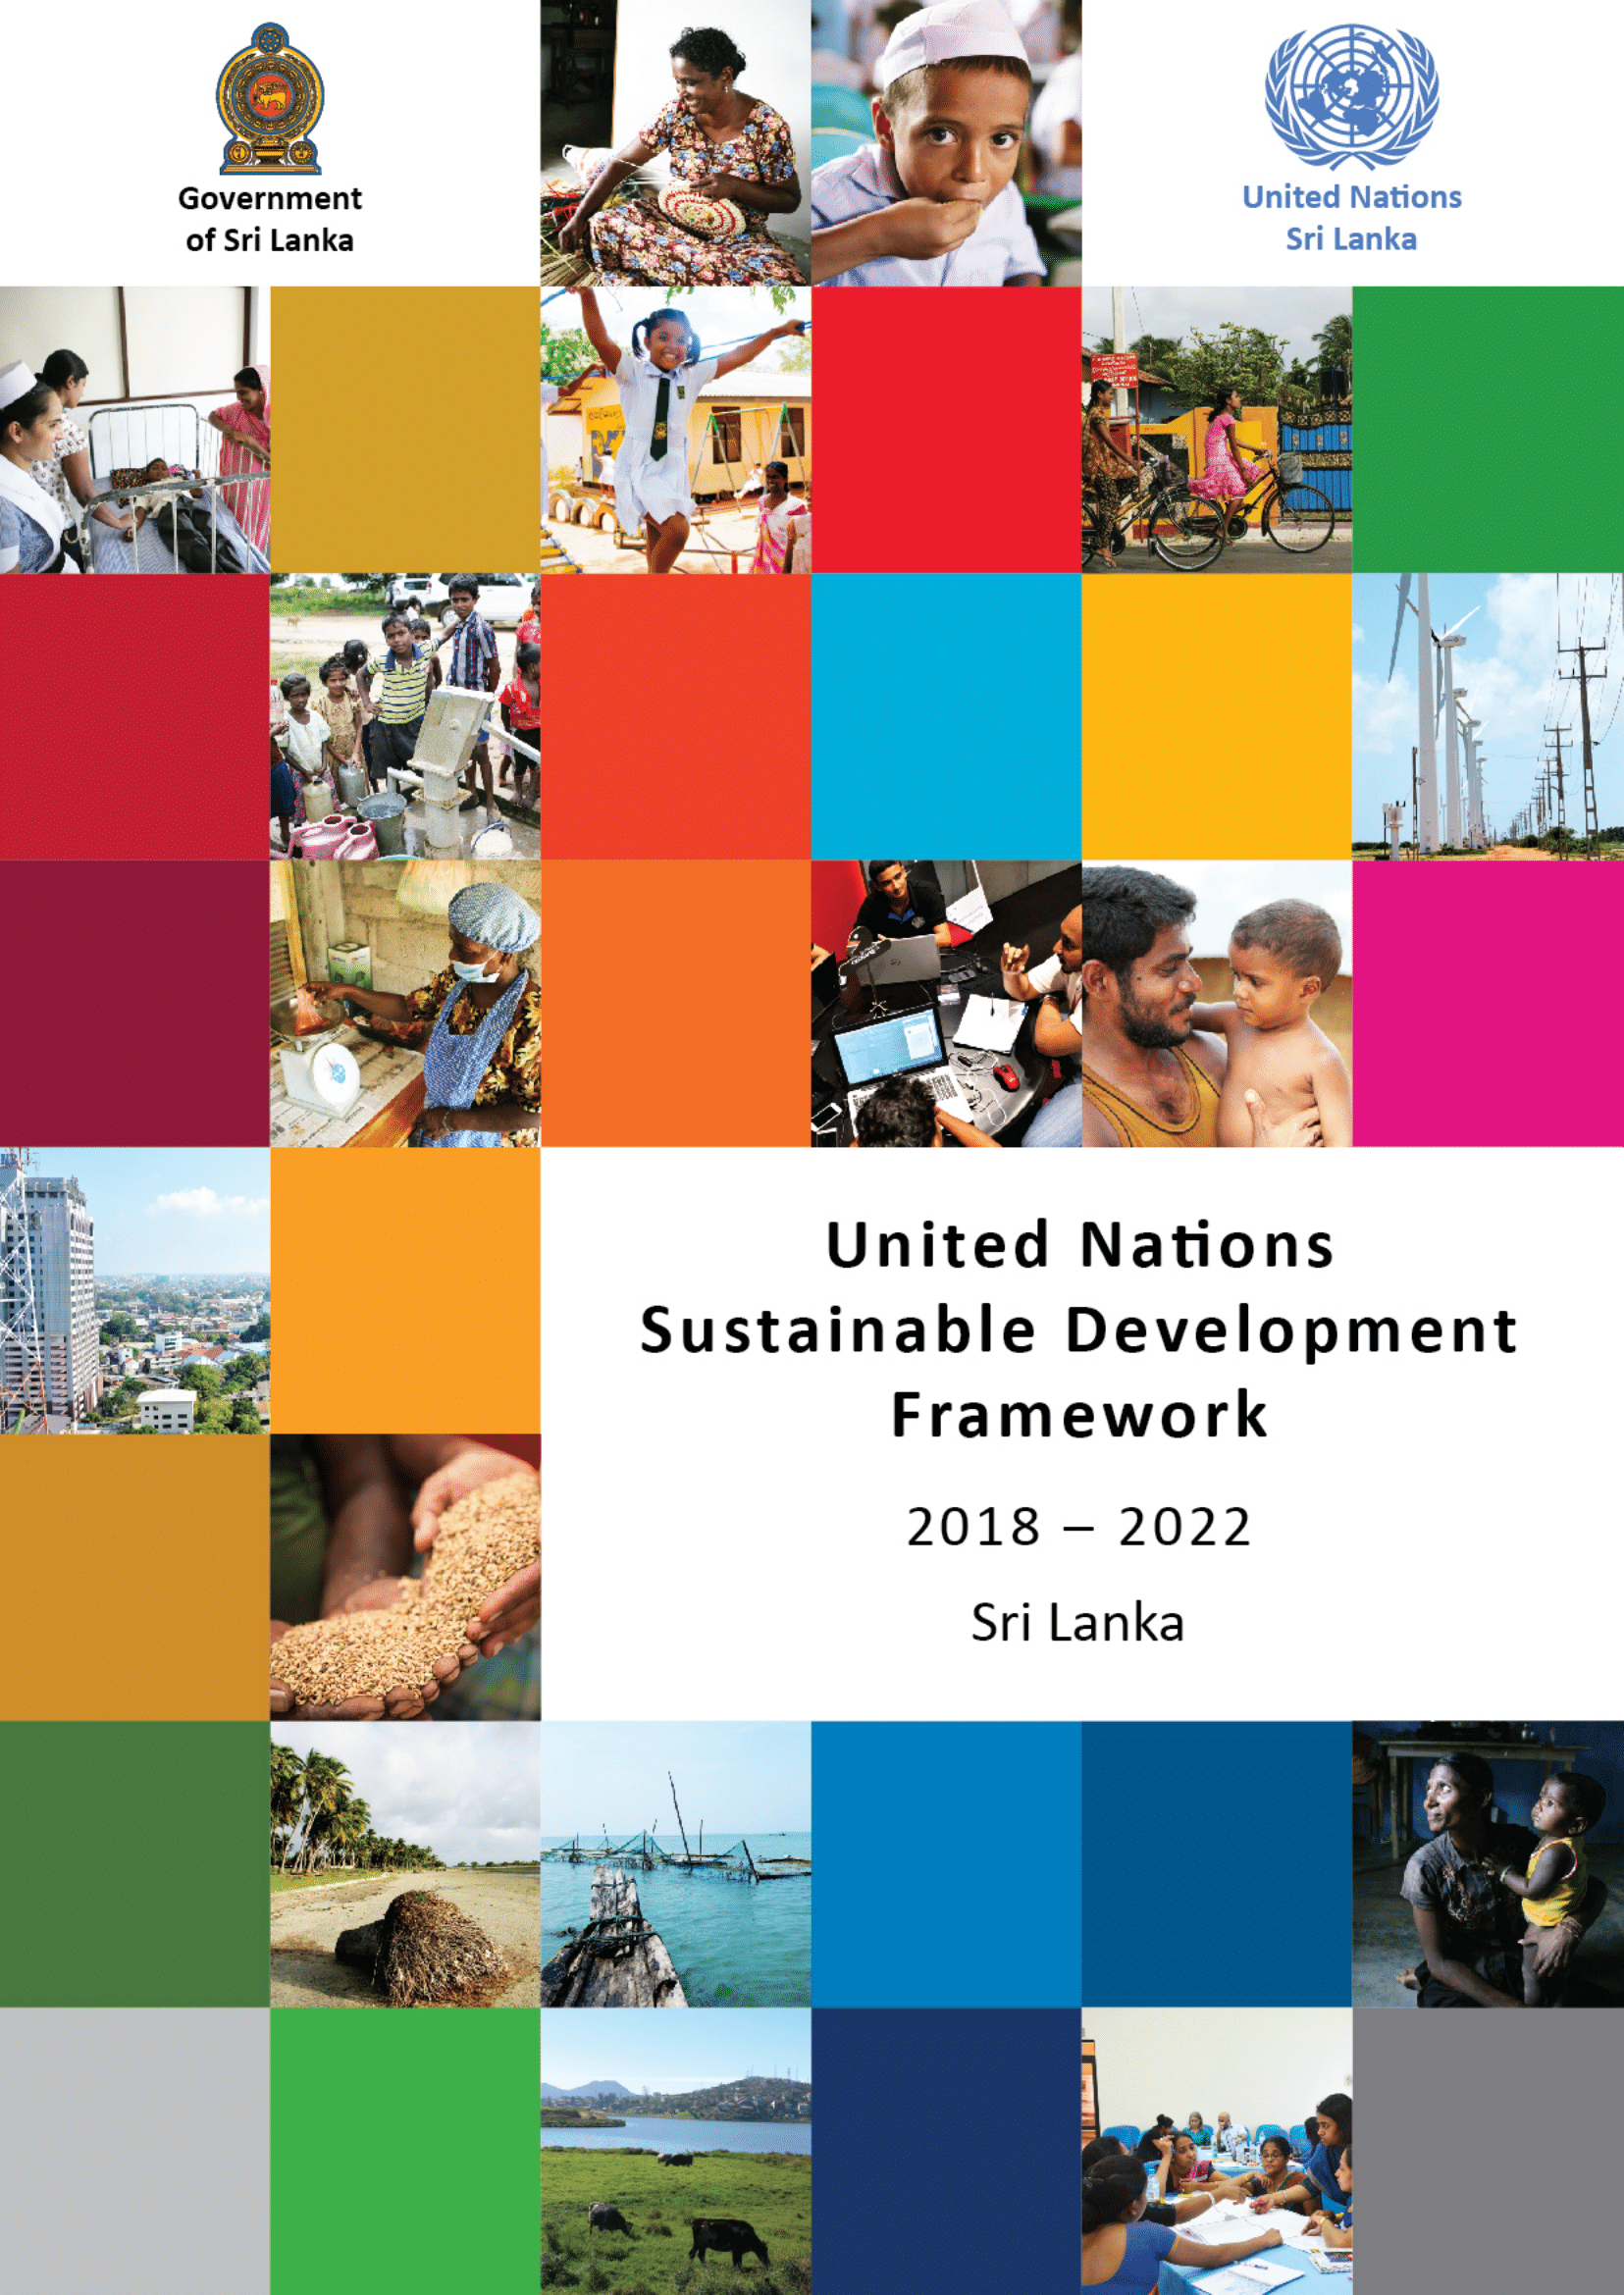 The United Nations Sustainable Development Framework